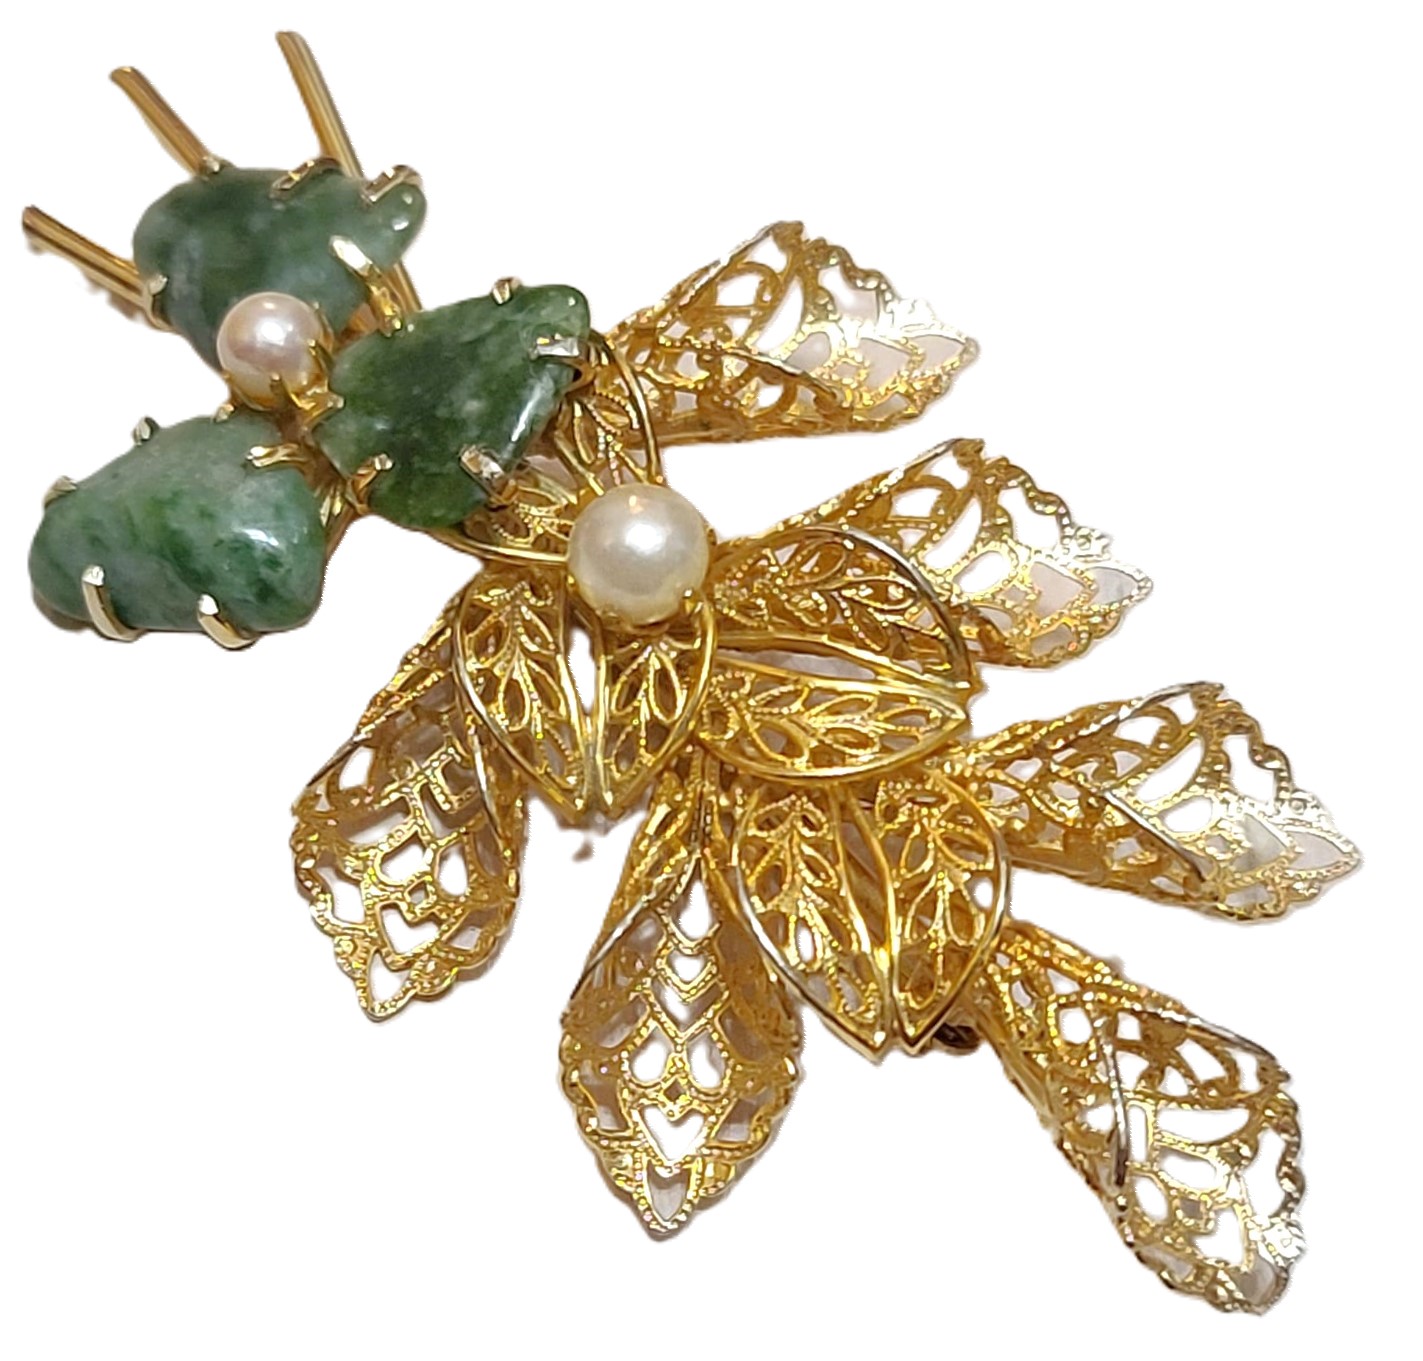 Vintage jade shamrock pin, 3 leaf clover pin, jade gemstone, pin size 4 1/2 inches long